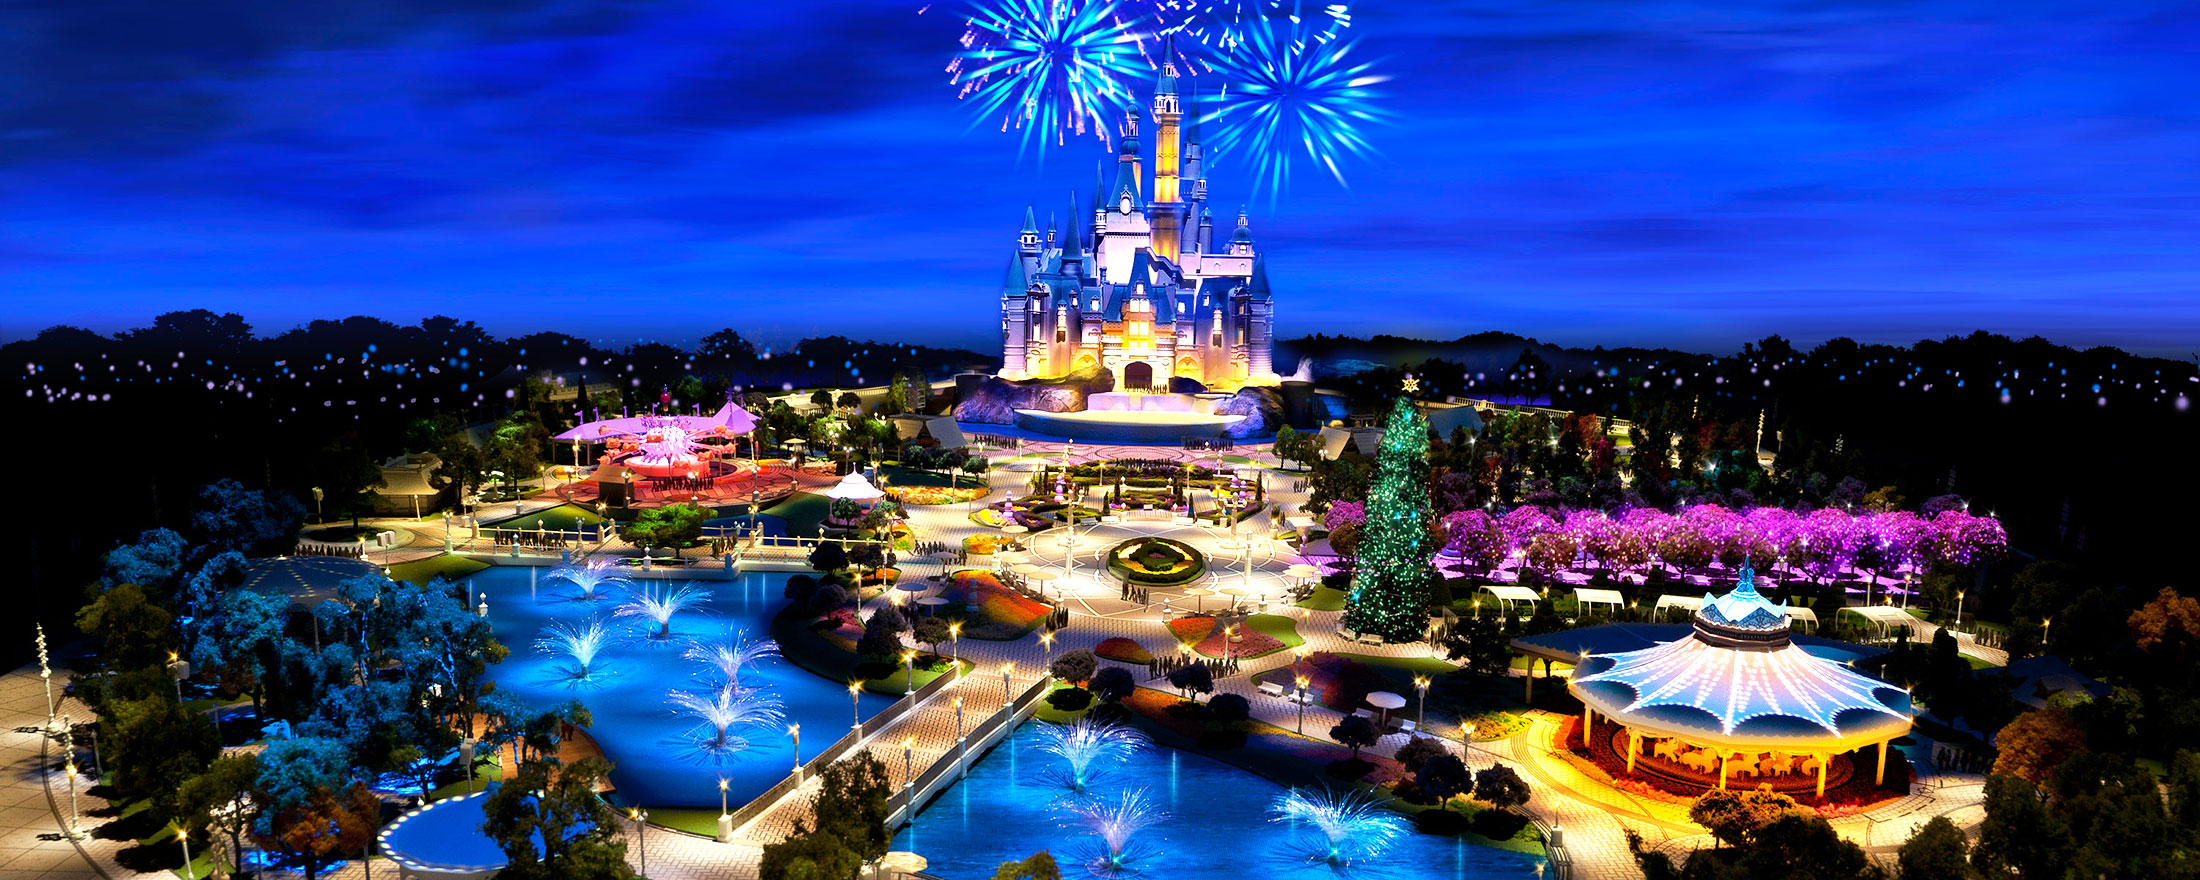 Fireworks over the castle at a Disney park